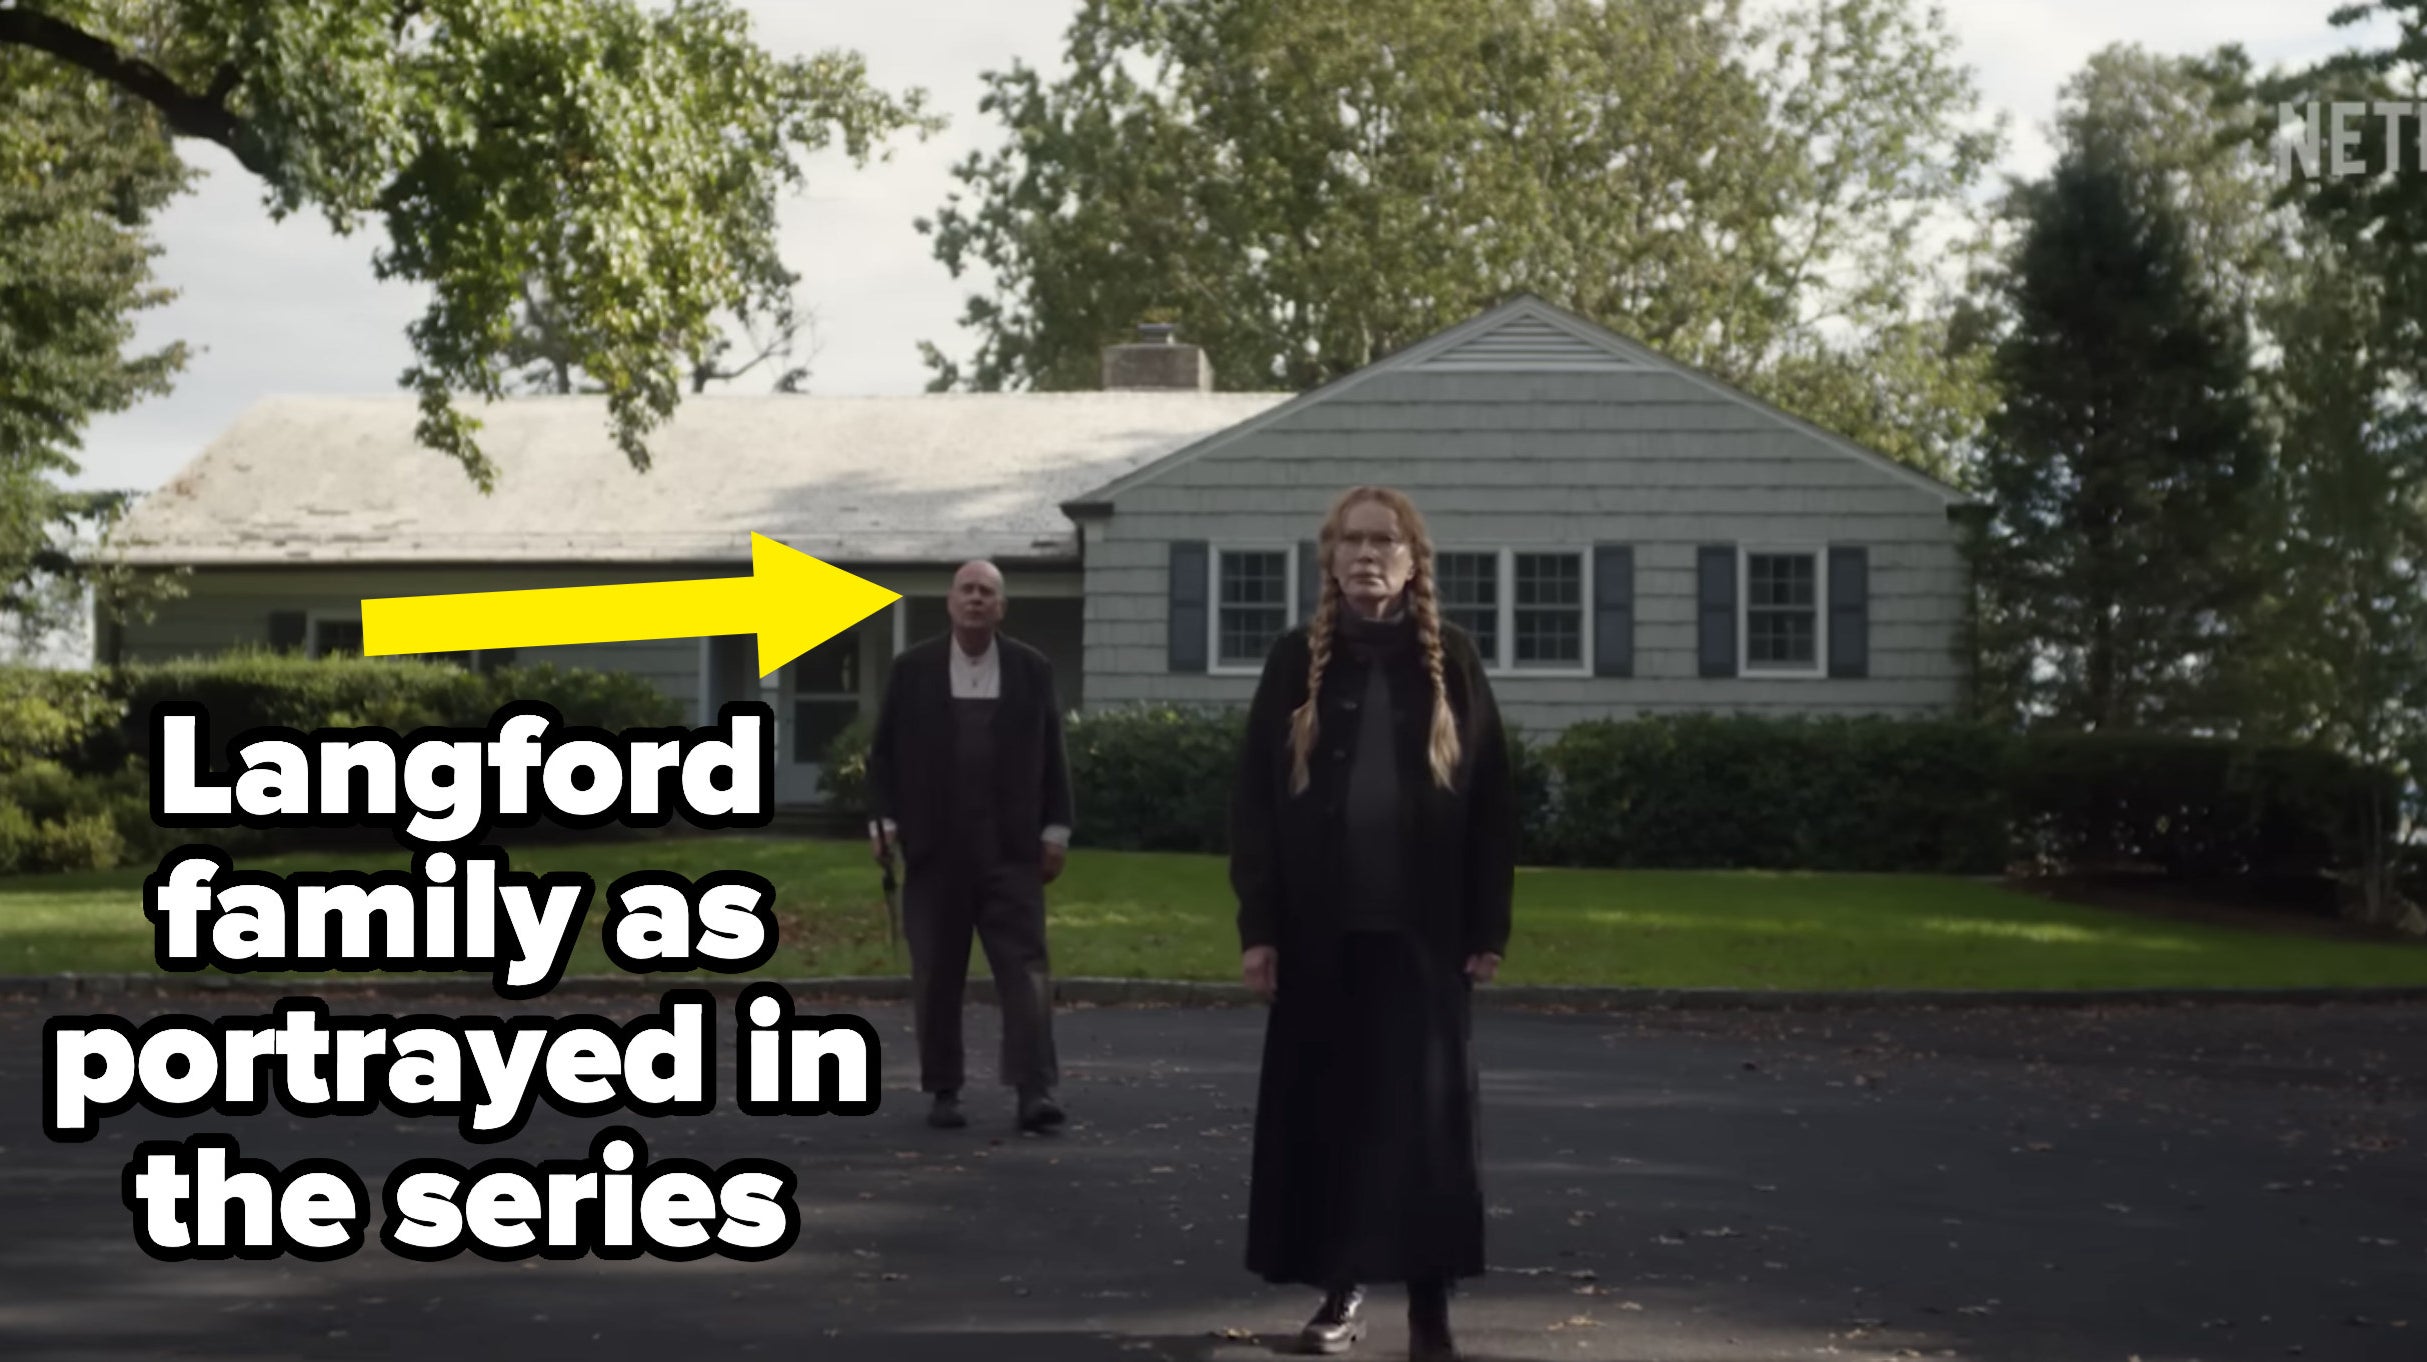 The Watcher Netflix Cast Real-Life Creepy Neighbor Stories